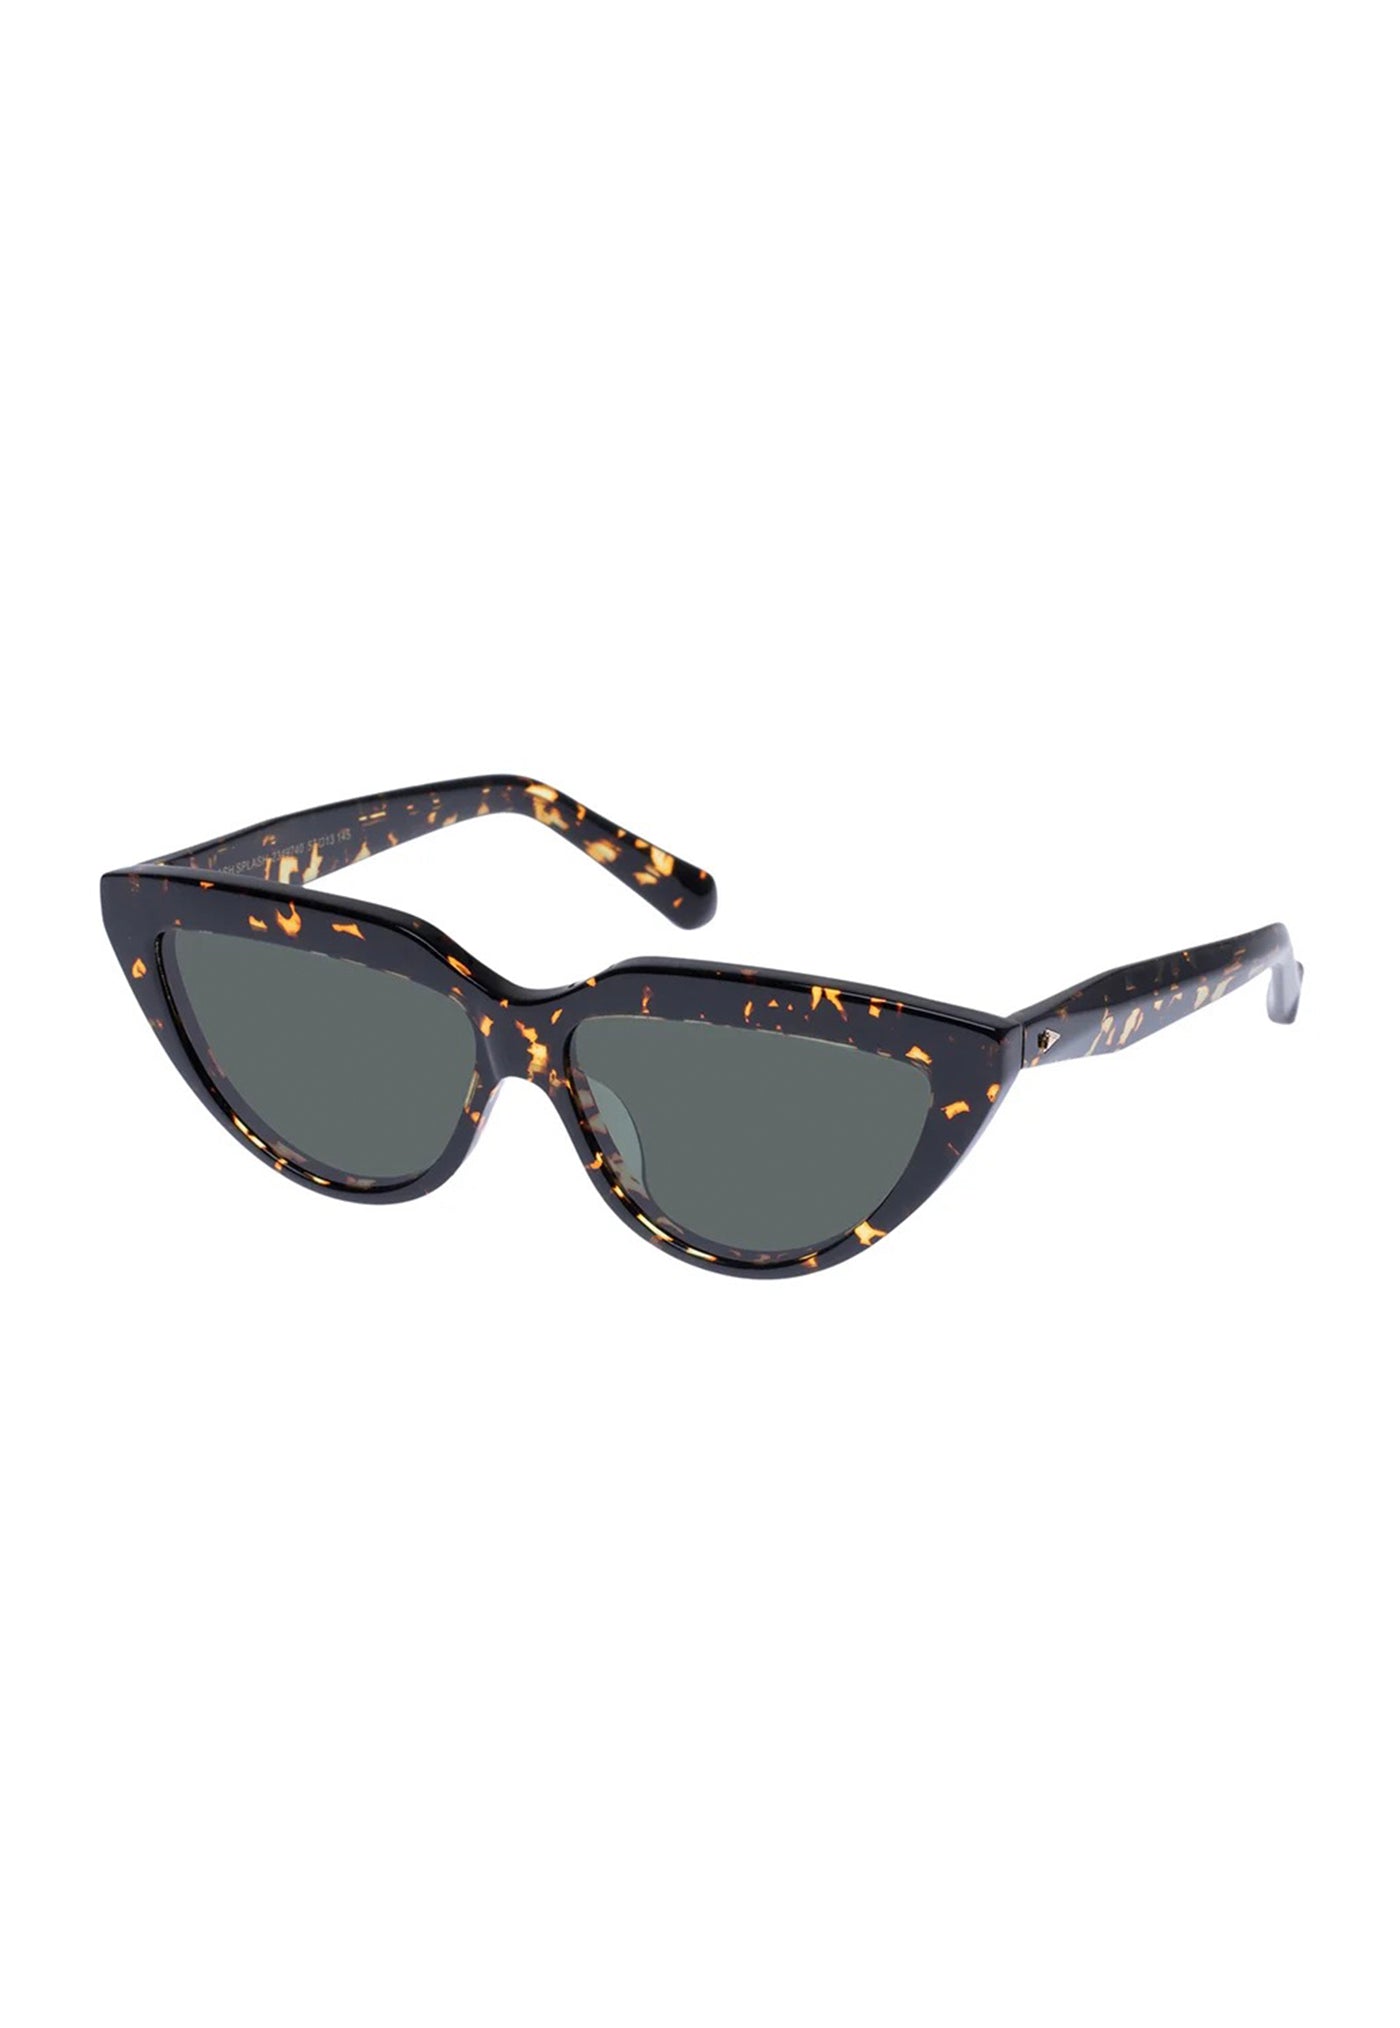 Lash Splash Sunglasses - Cracked Tort sold by Angel Divine